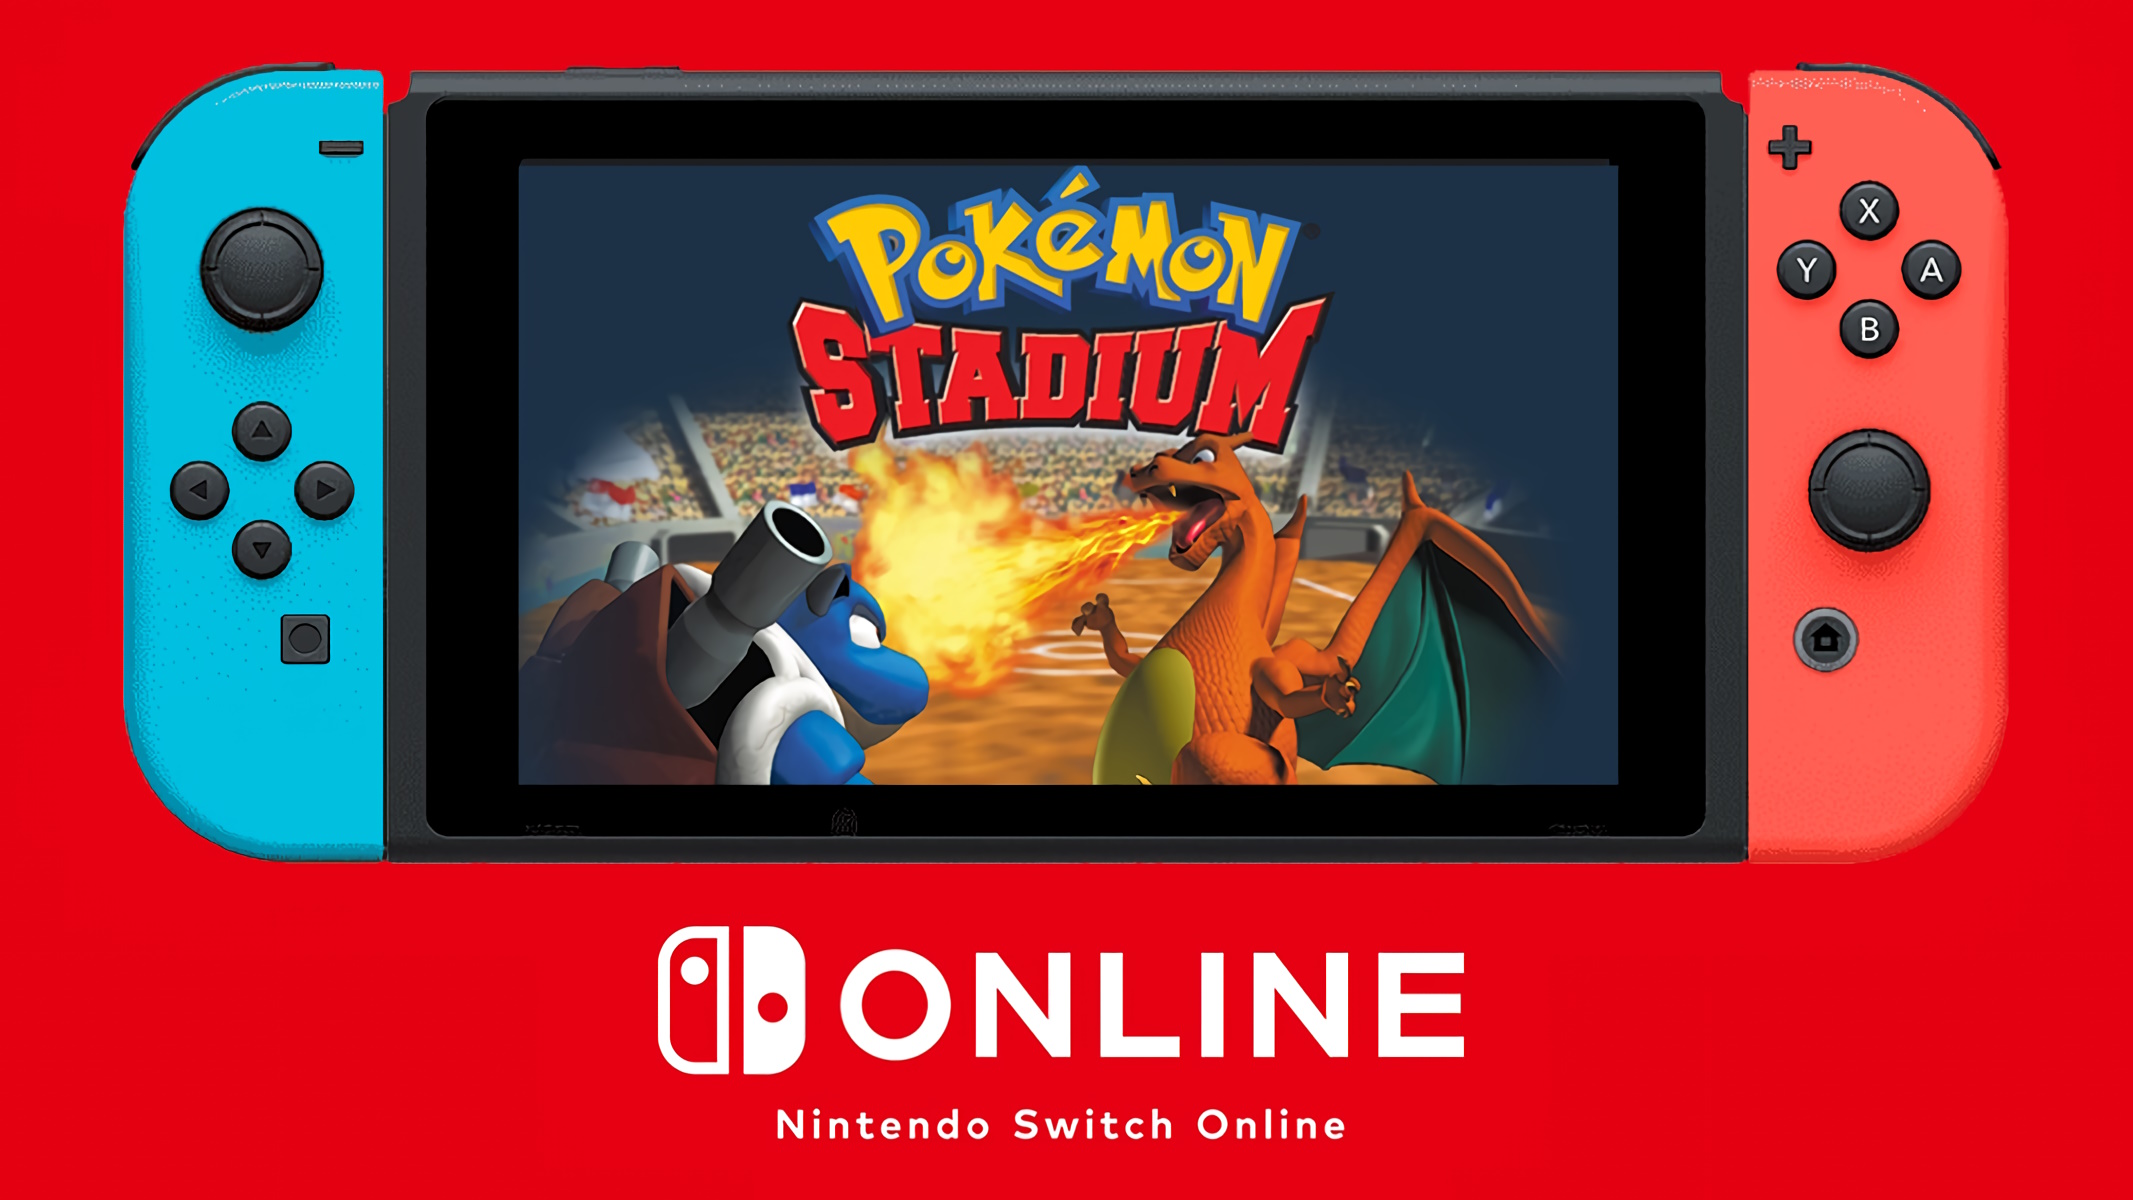 Pokémon Stadium N64 Nintendo Switch Online